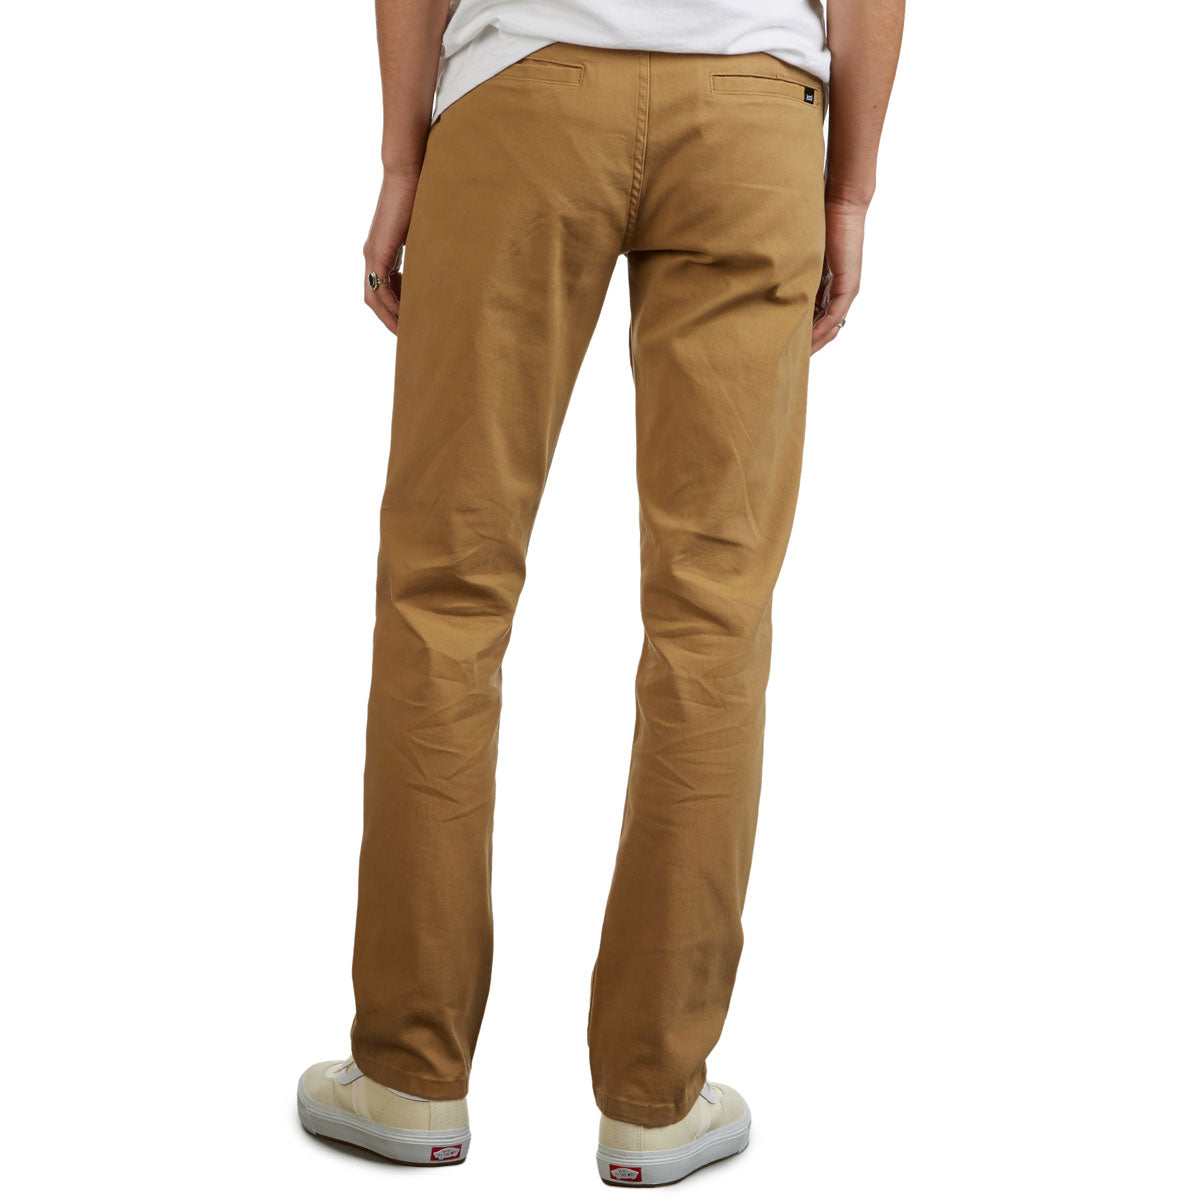 CCS Standard Plus Straight Chino Pants - Khaki image 3